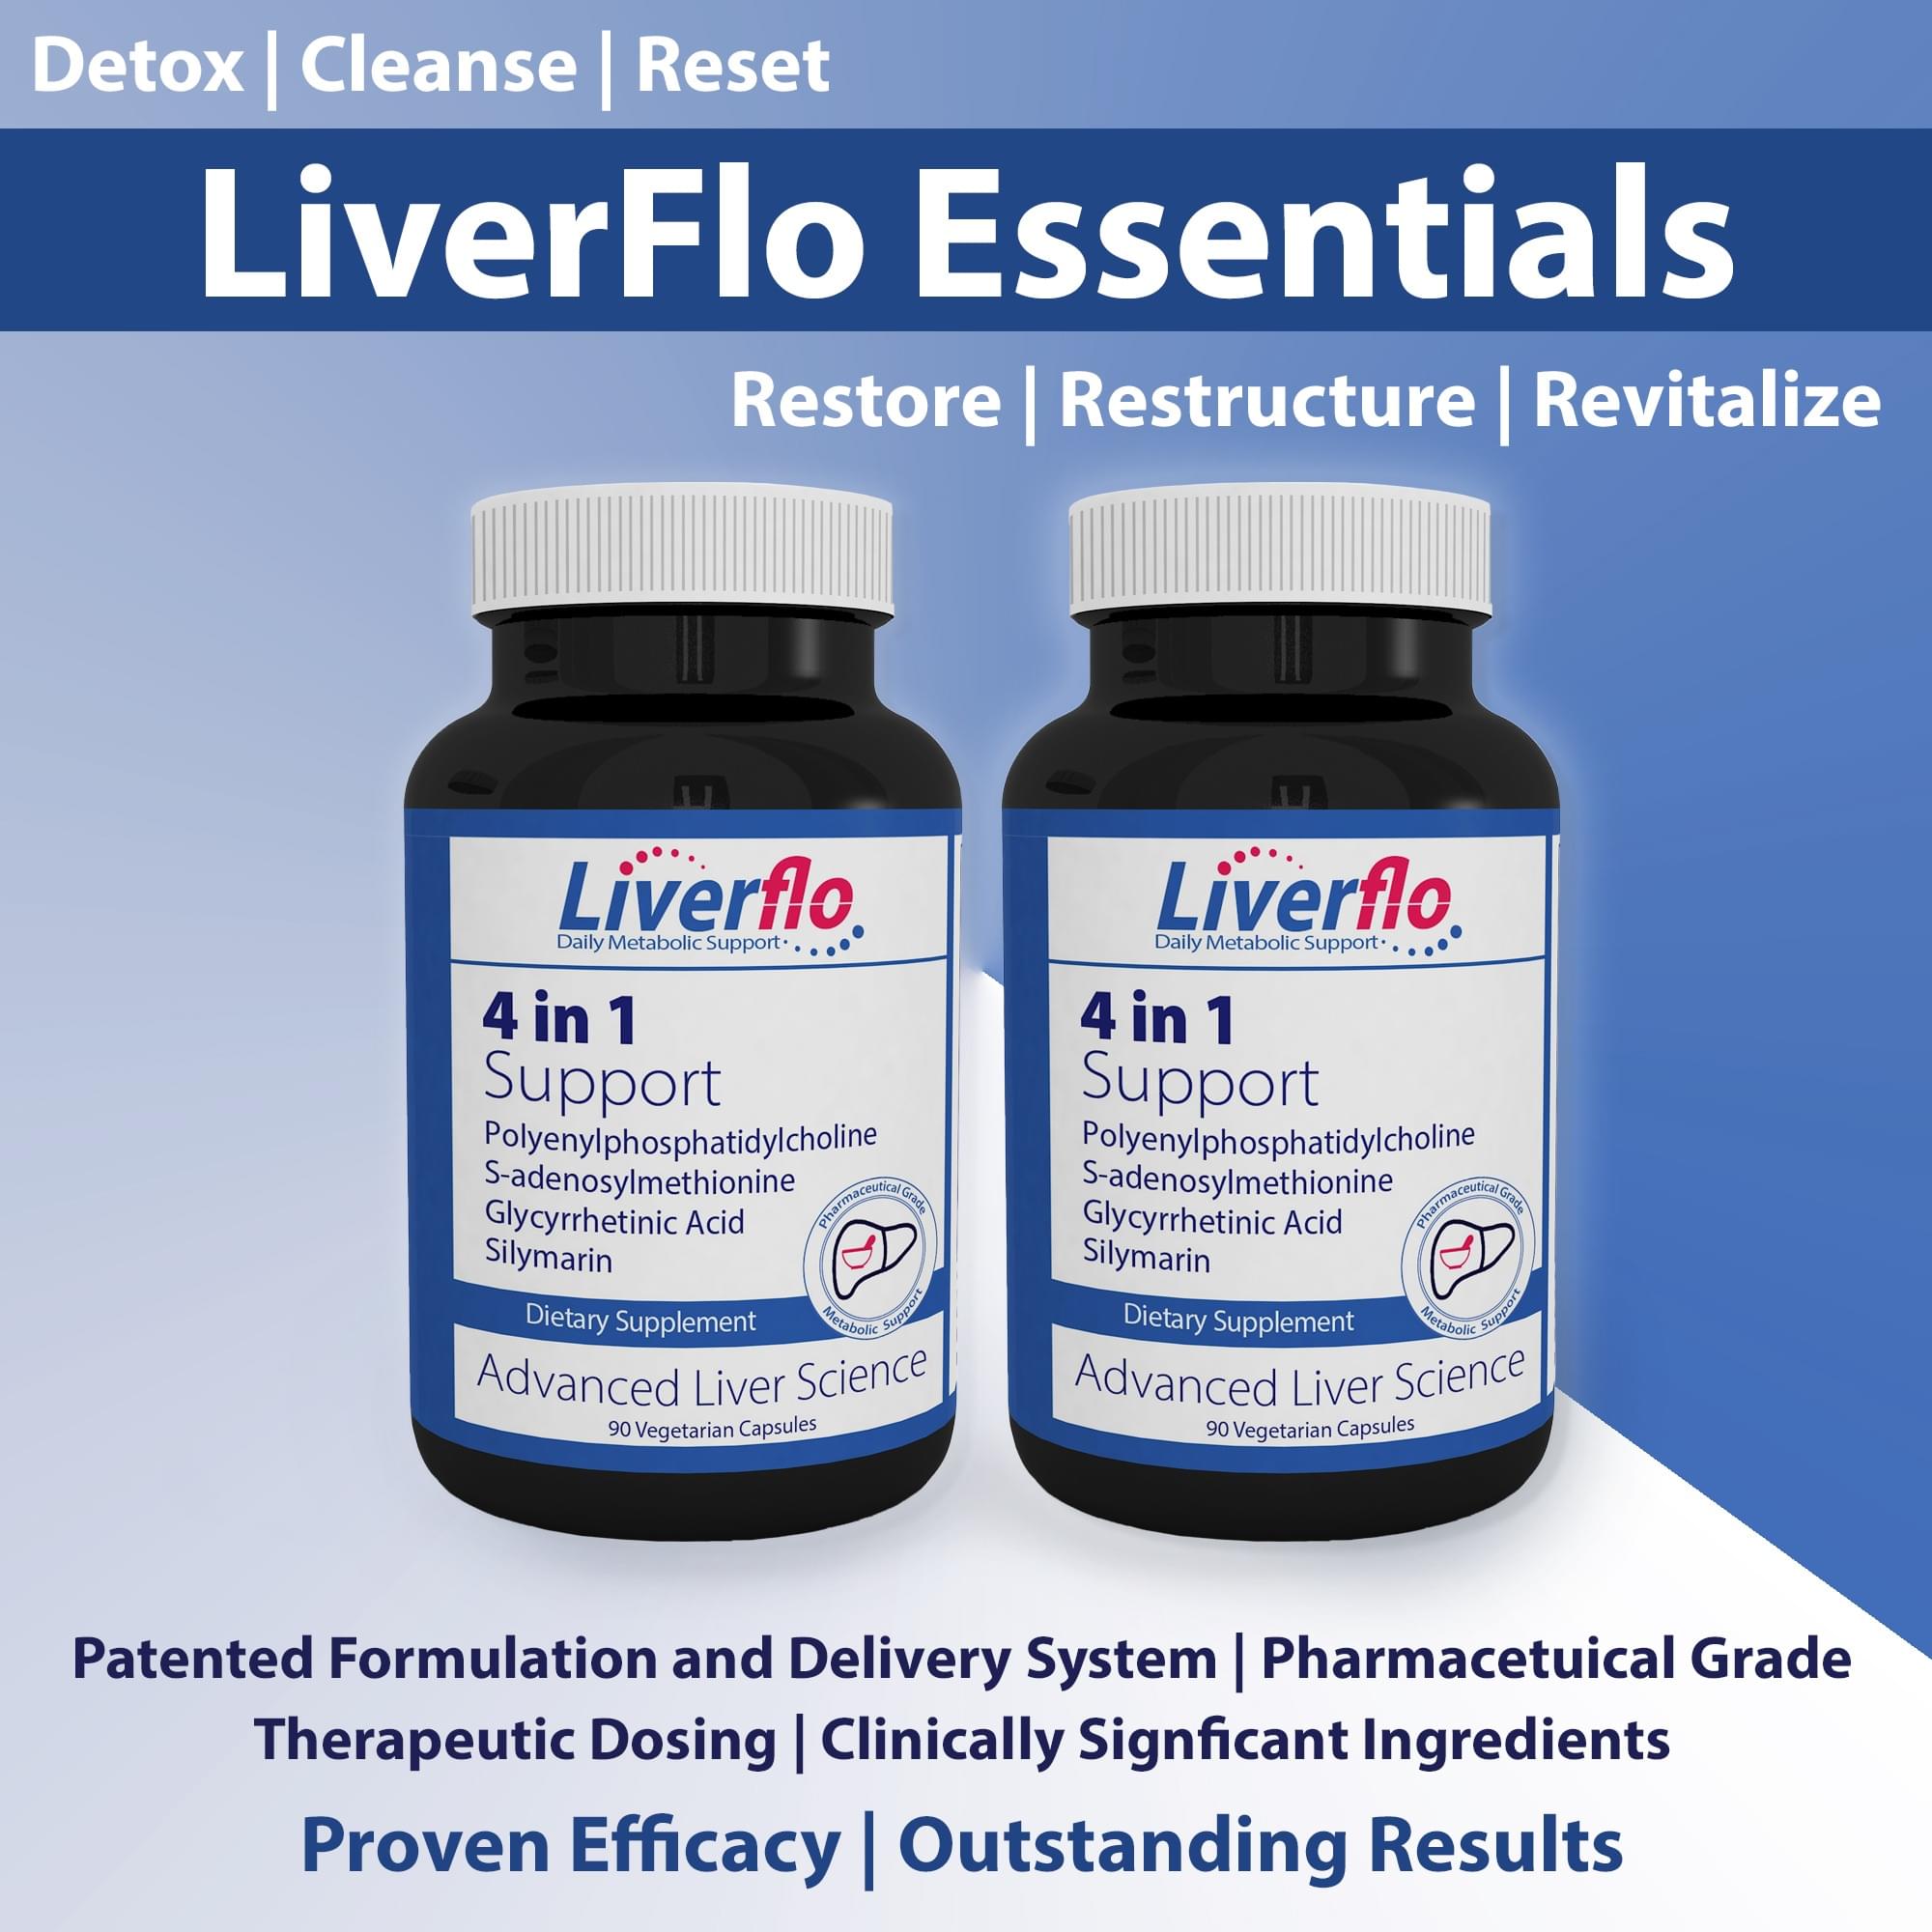 LiverFlo Essential Protocol